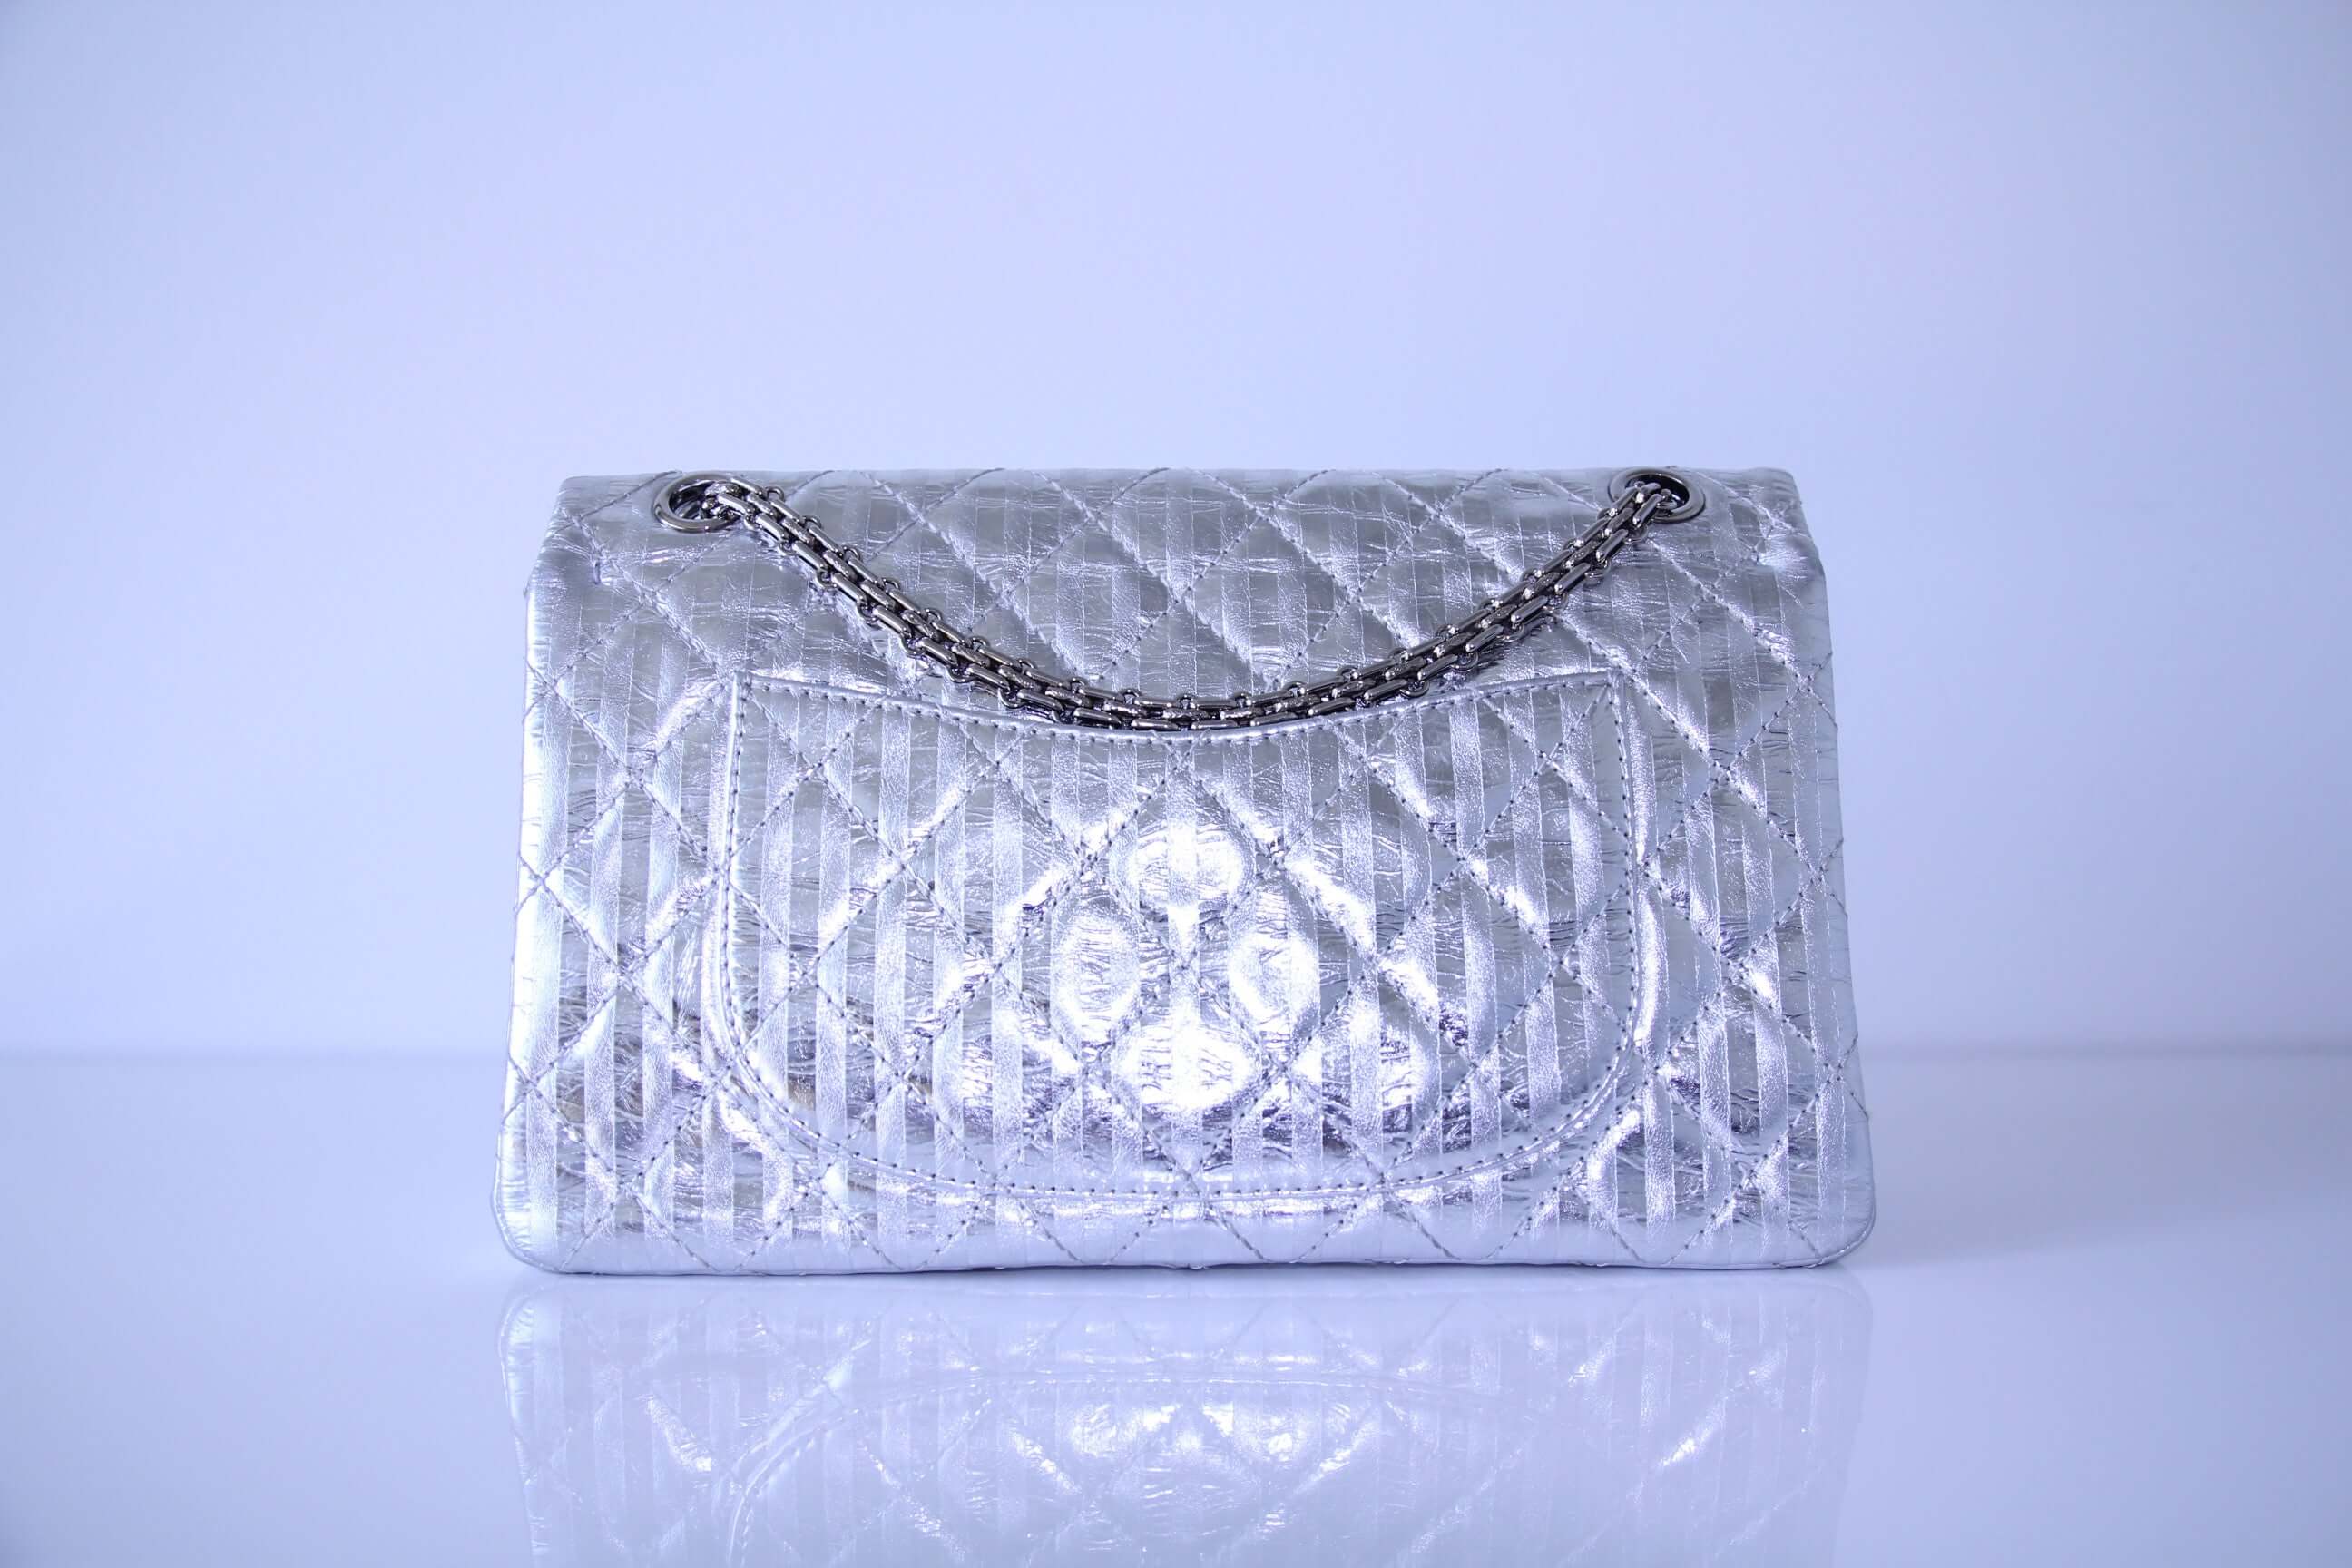 Back of Medium Chanel handbag in finished in stripped silver calfskin